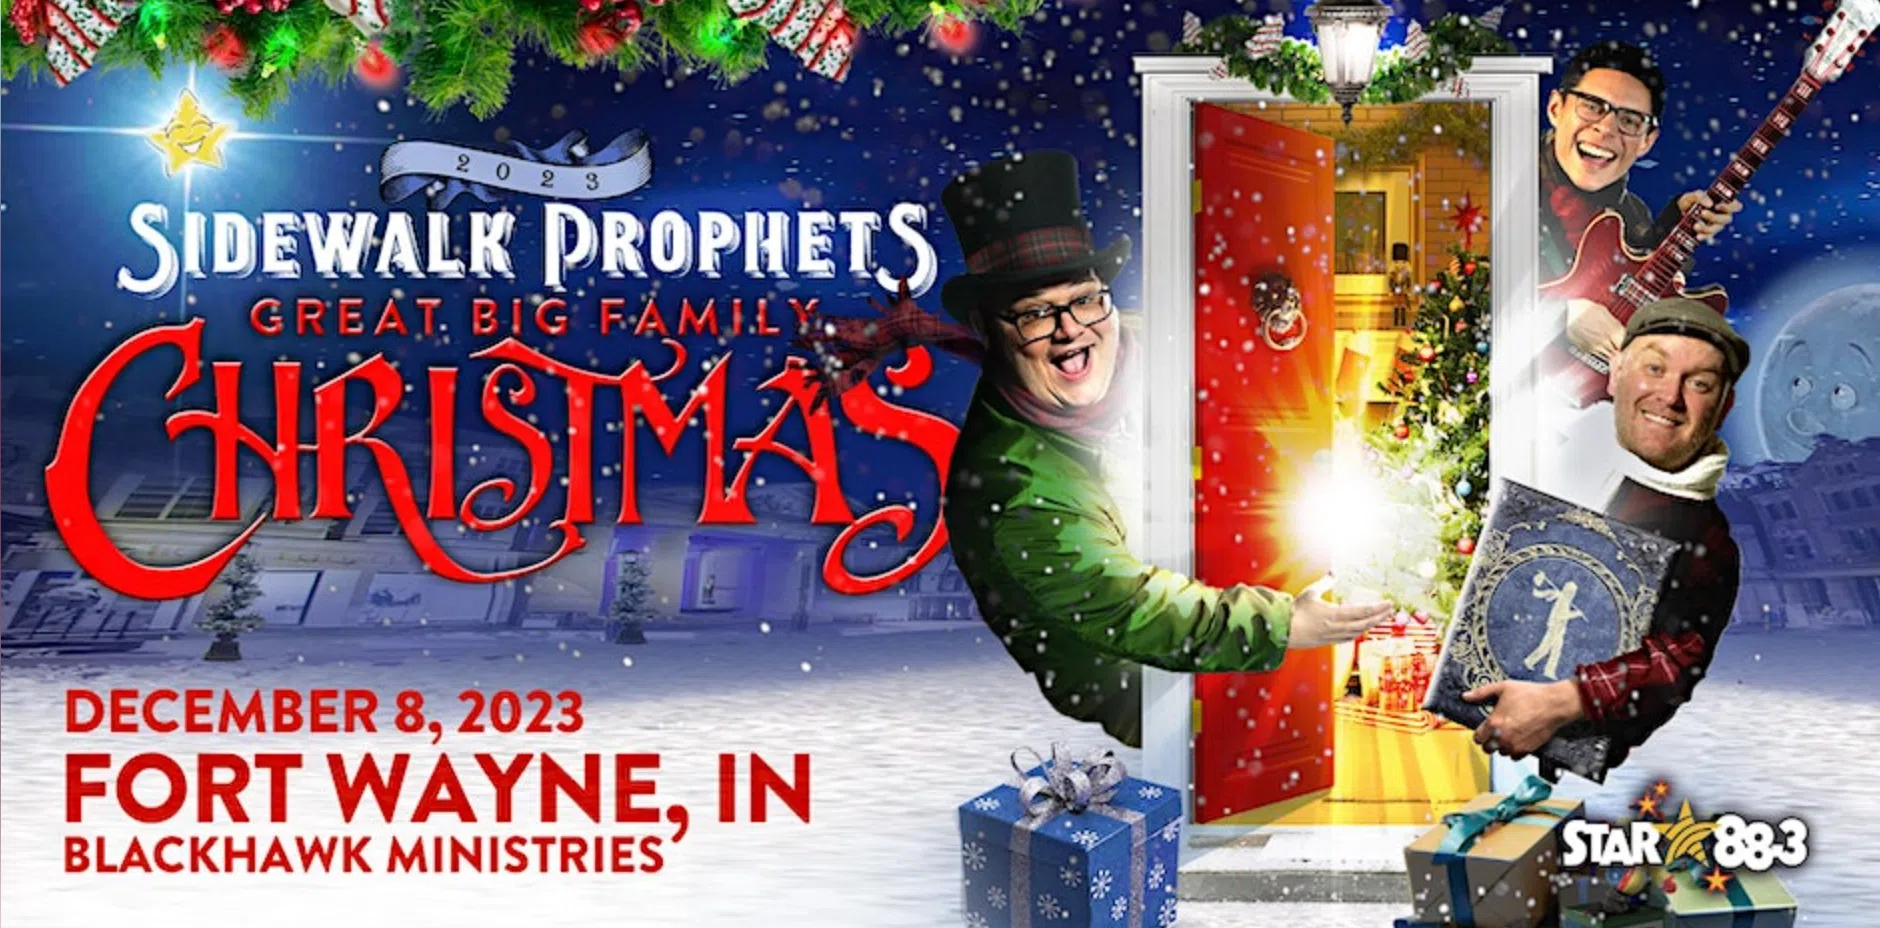 Dave Frey Sidewalk Prophets Great Big Family Christmas Concert